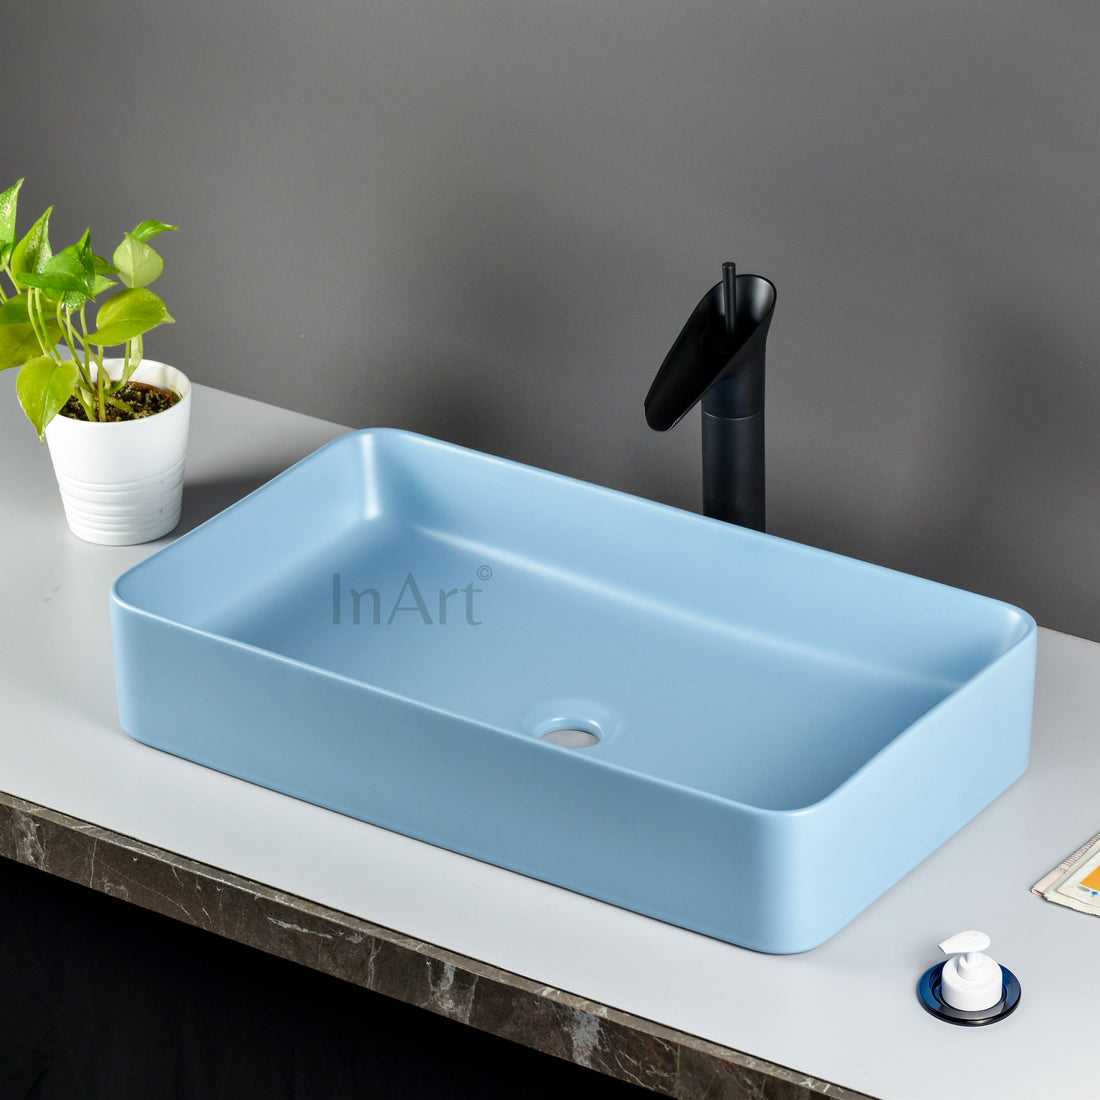 InArt Wash Basin Designer Counter Top Bathroom Sink - Vanity Wash Basin for Bathroom, Table Top Wash Basin 62 x 35 x 12 cm Matt Blue DW272 - InArt-Studio